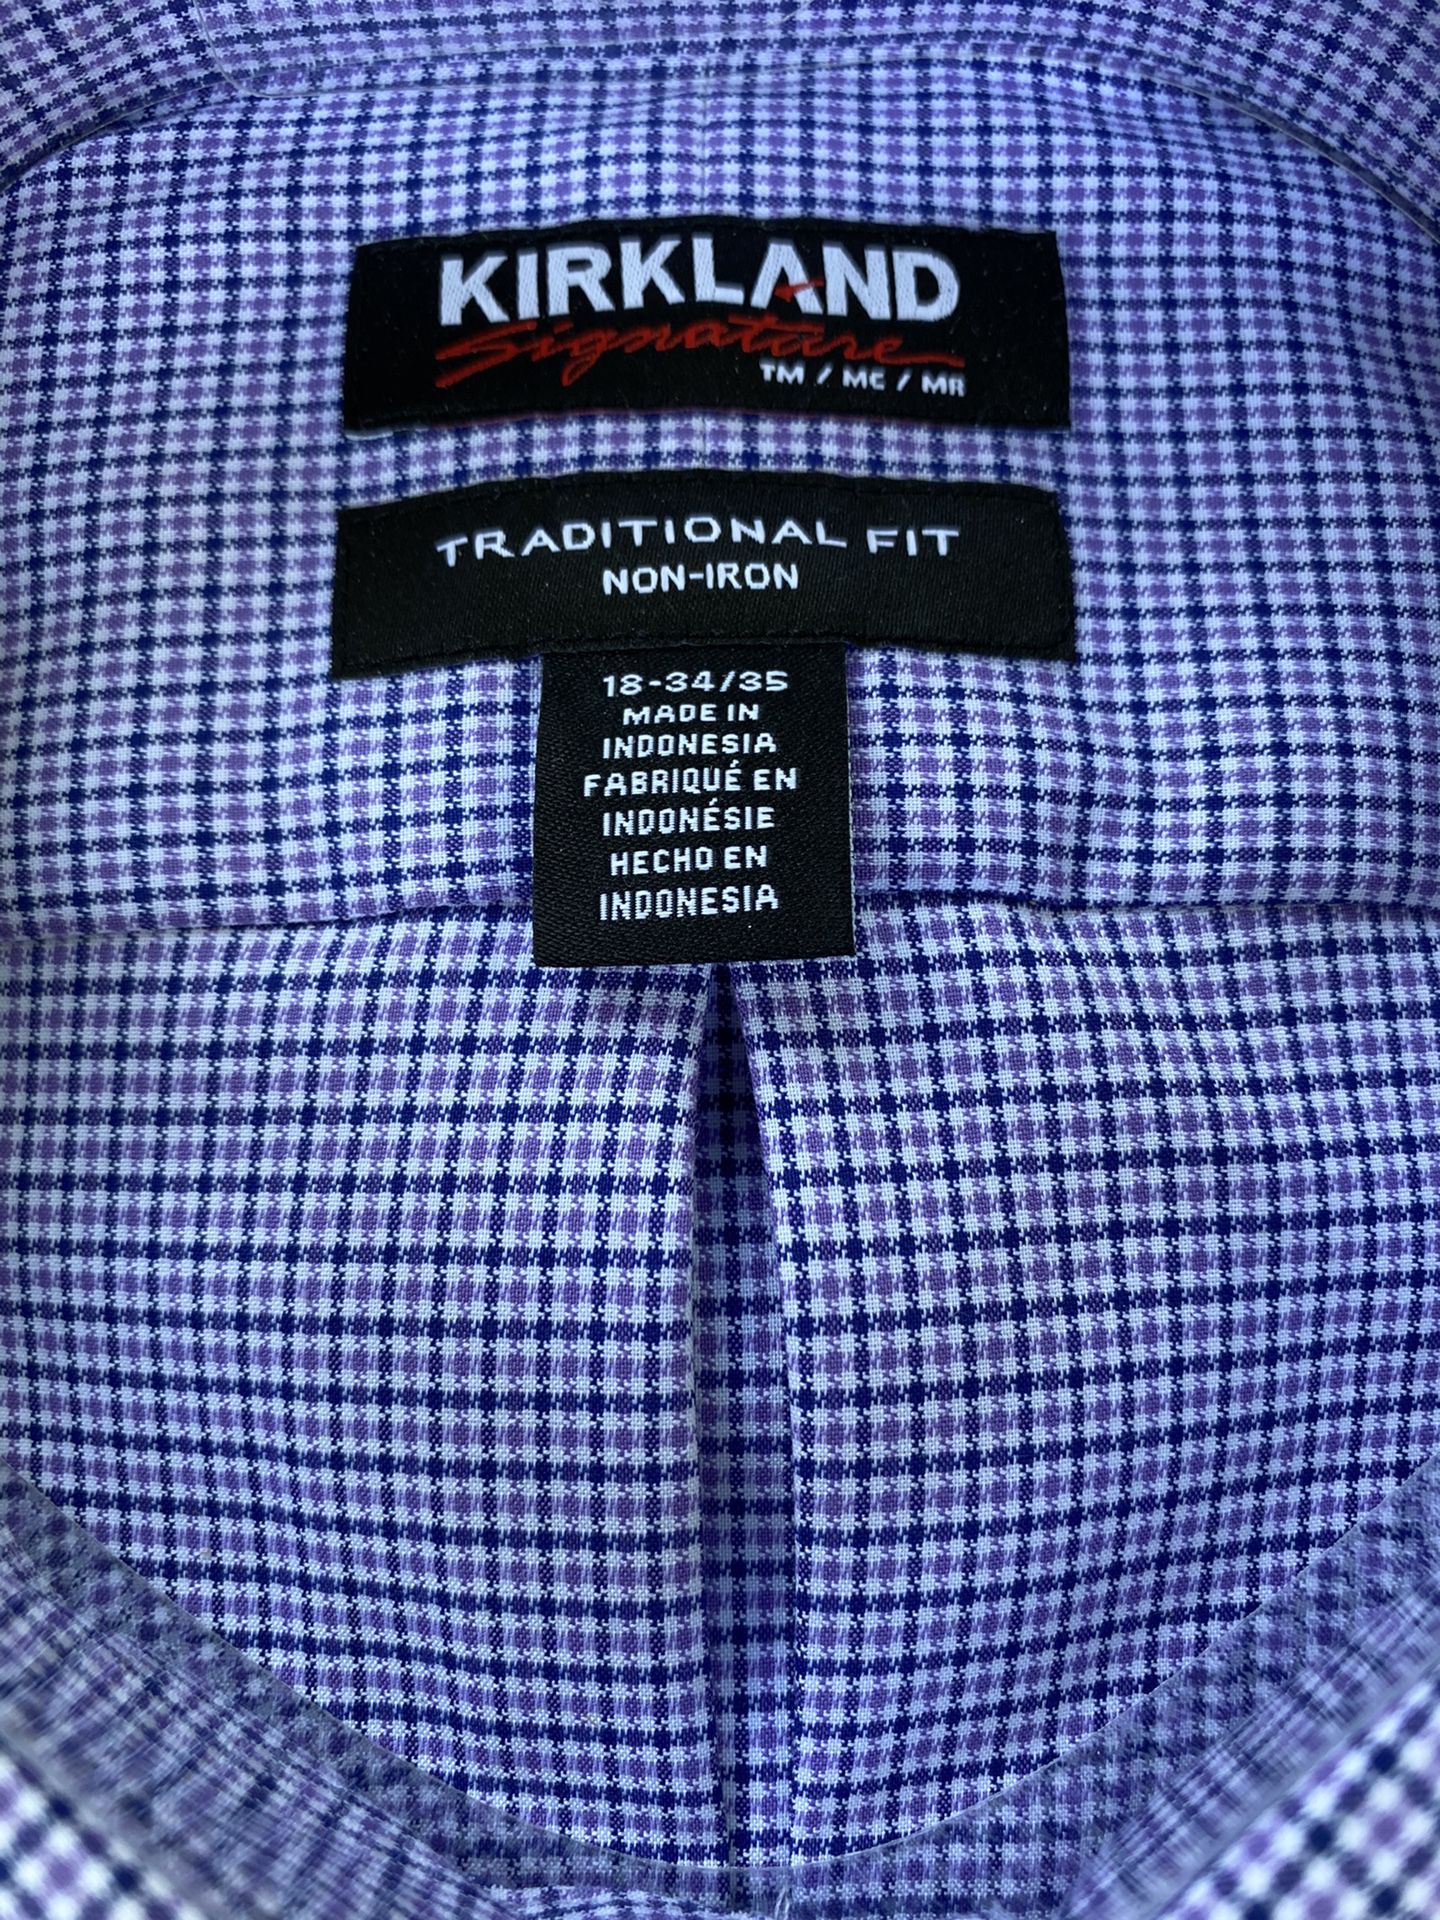 Kirkland Men’s Button Down Dress Shirt Blue/Purple Check 18x34/35